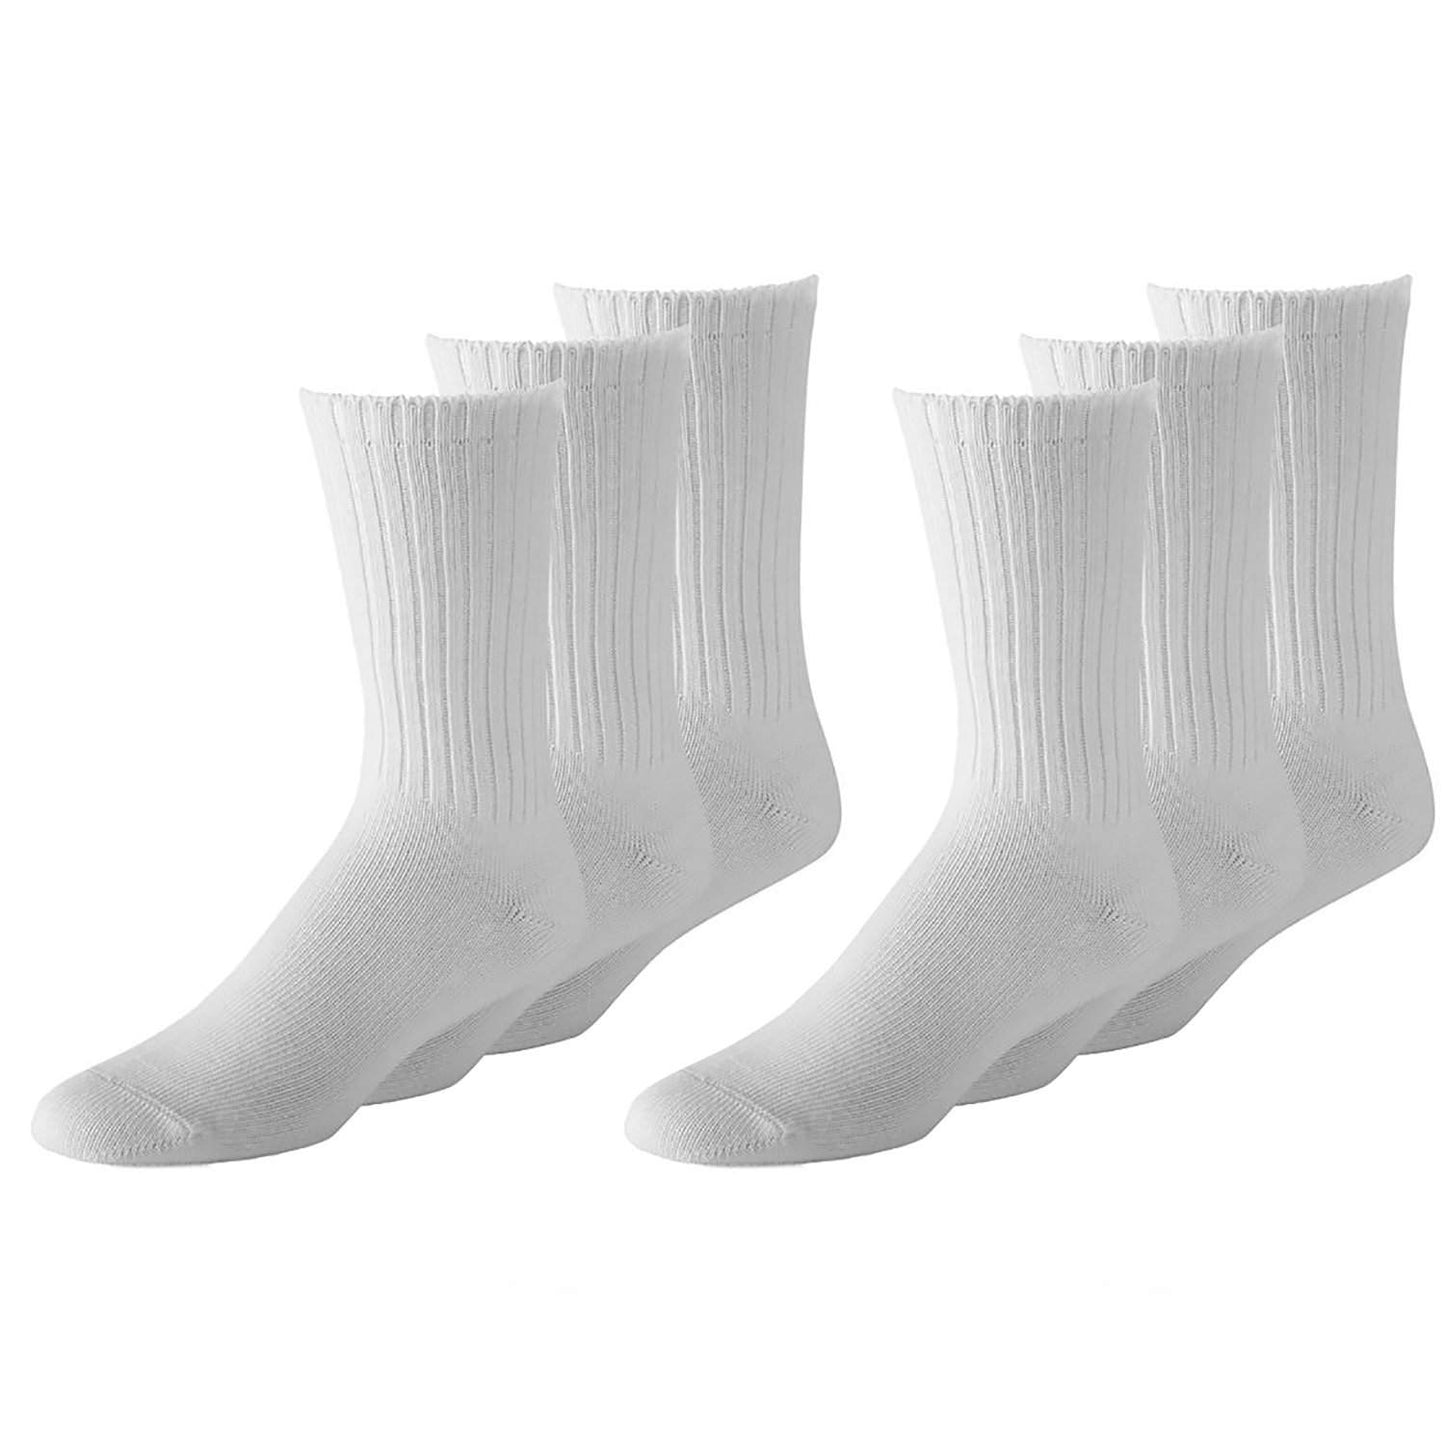 Daily Basic Unisex Crew Athletic Sports Cotton Socks  60 Pack